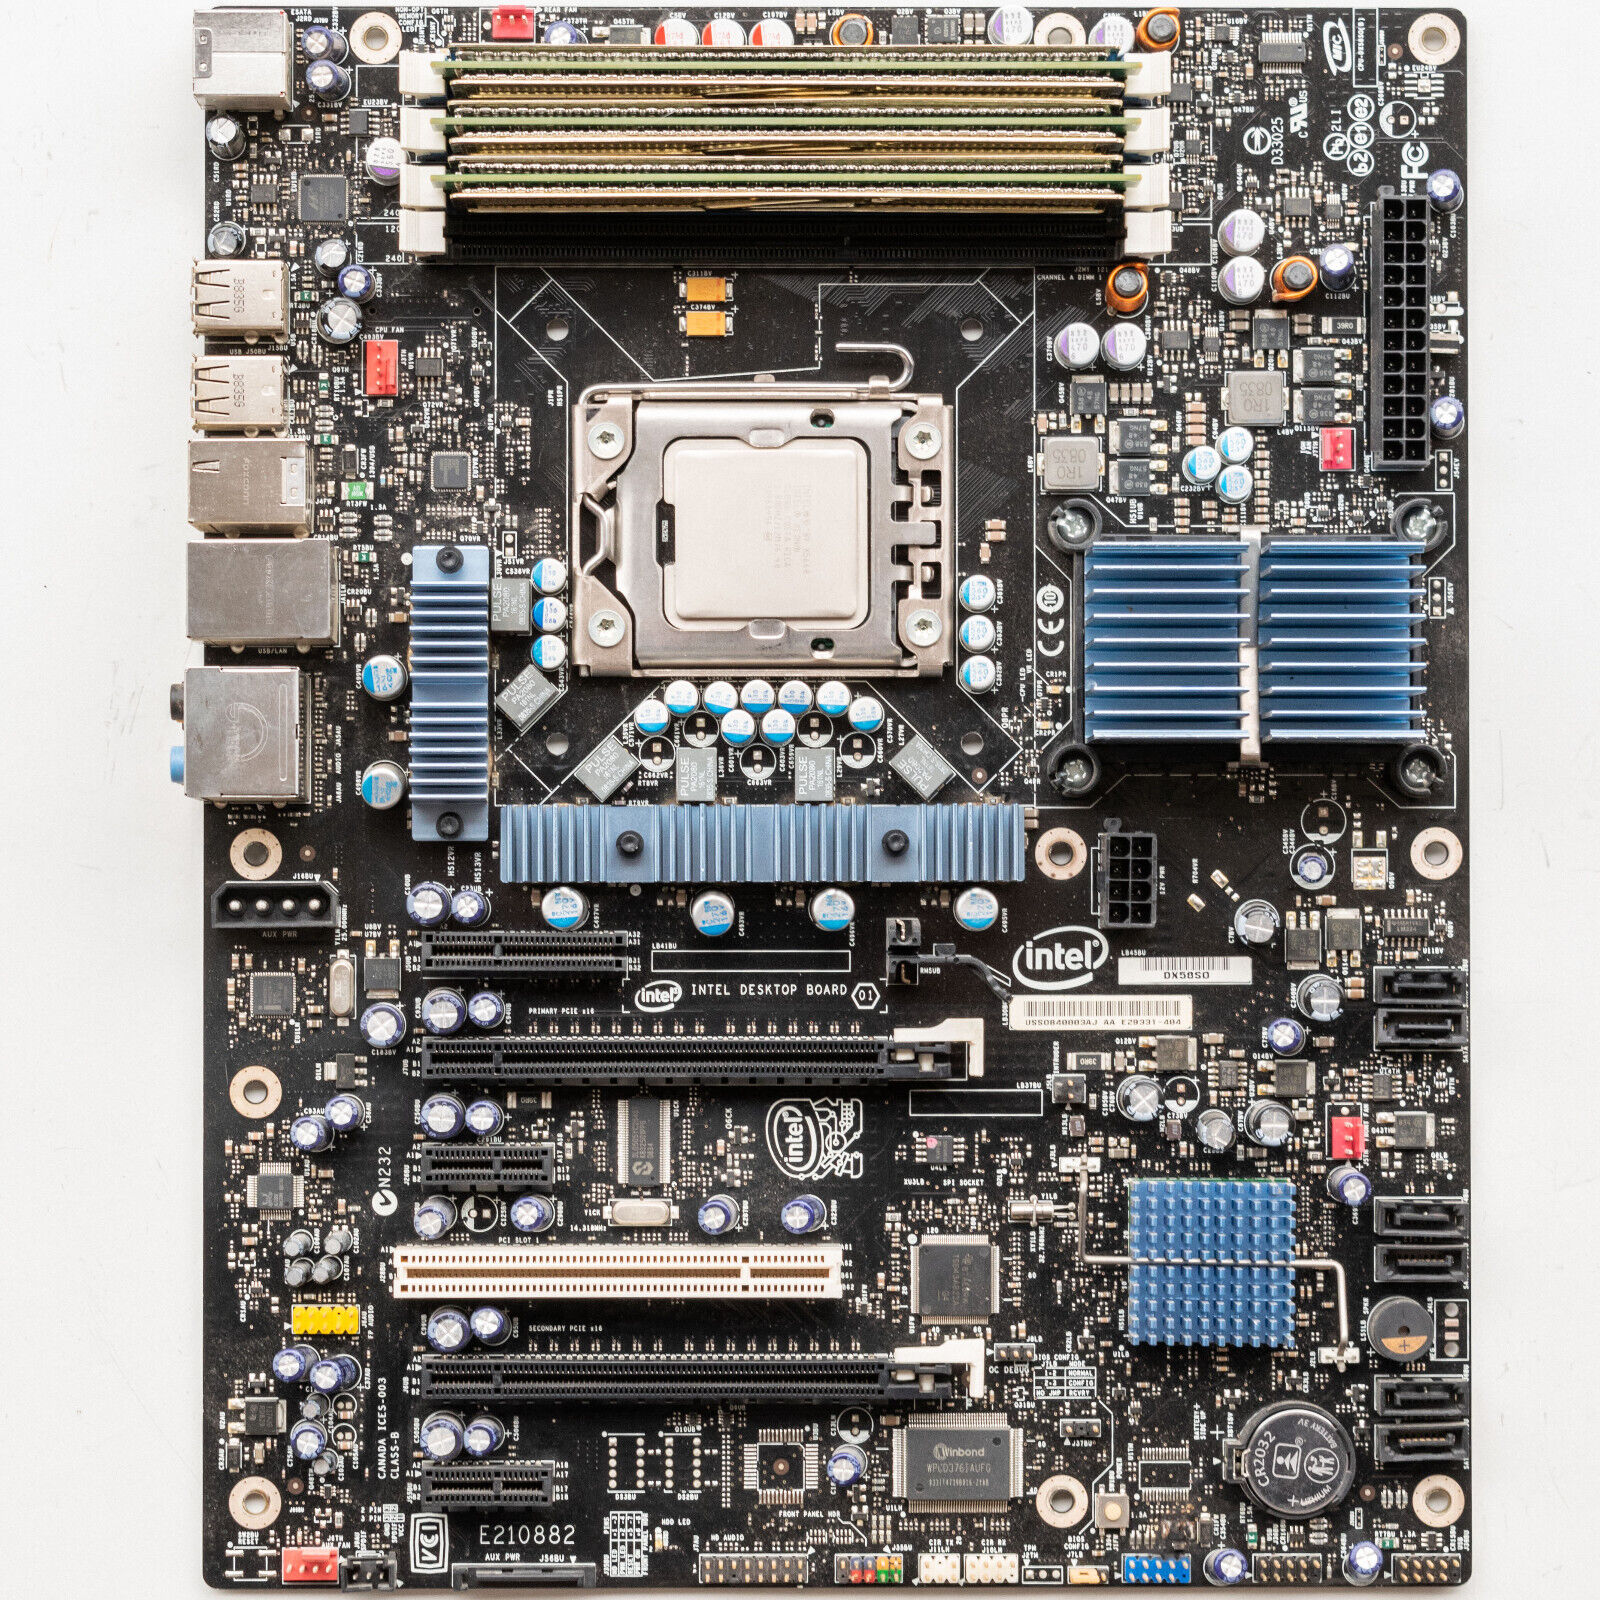 Intel DX58SO LGA1366 X58 Motherboard ATX DDR3 SLI 2-Way Windows 10 Ready